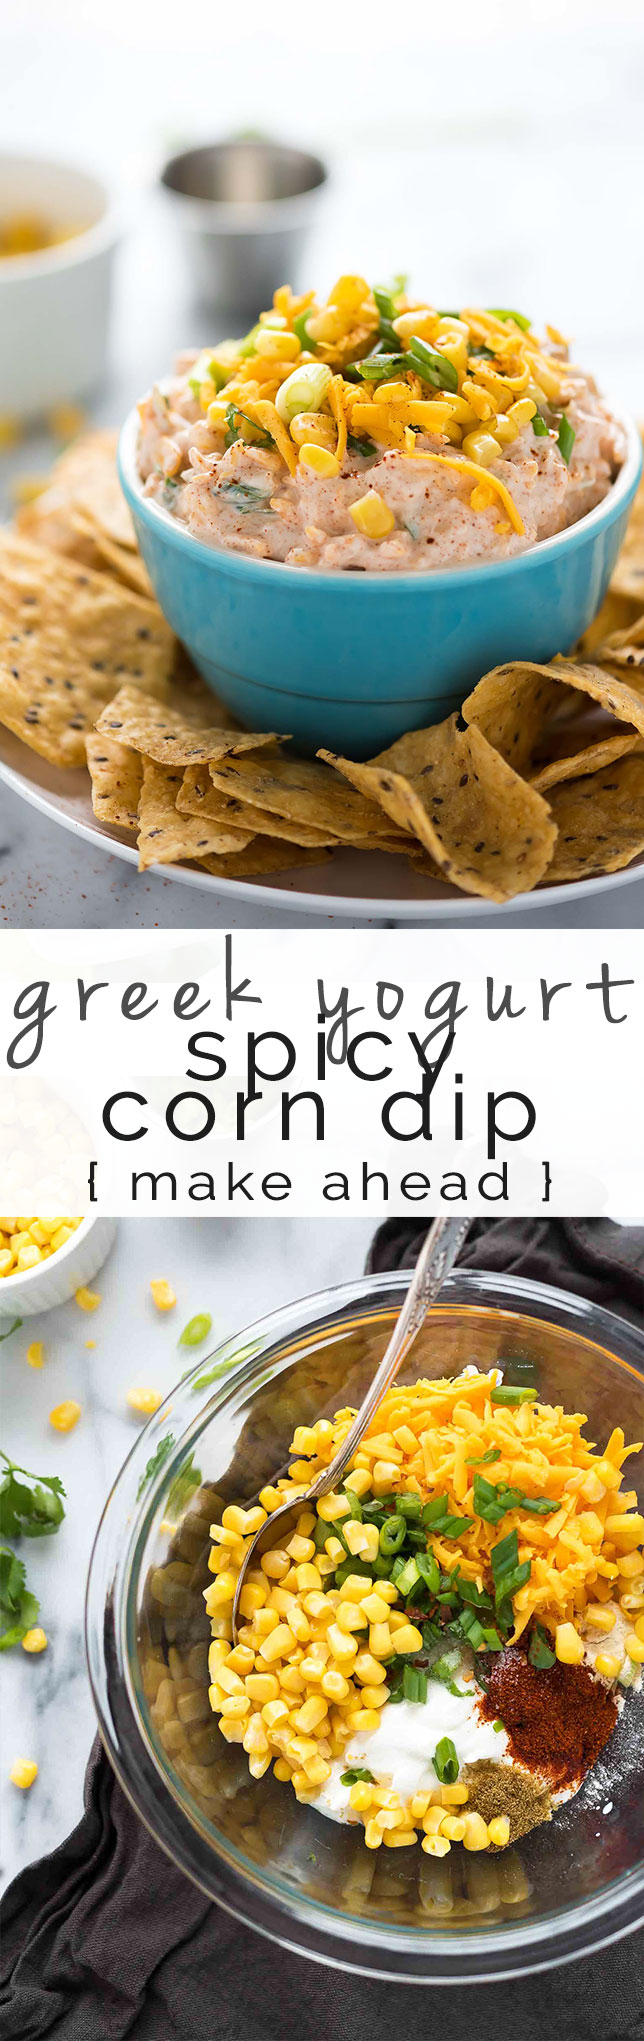 Spicy corn dip, cold, hot, recipe, easy, parties, tortilla chips, super bowl, greek yogurt, snacks, healthy, gluten free